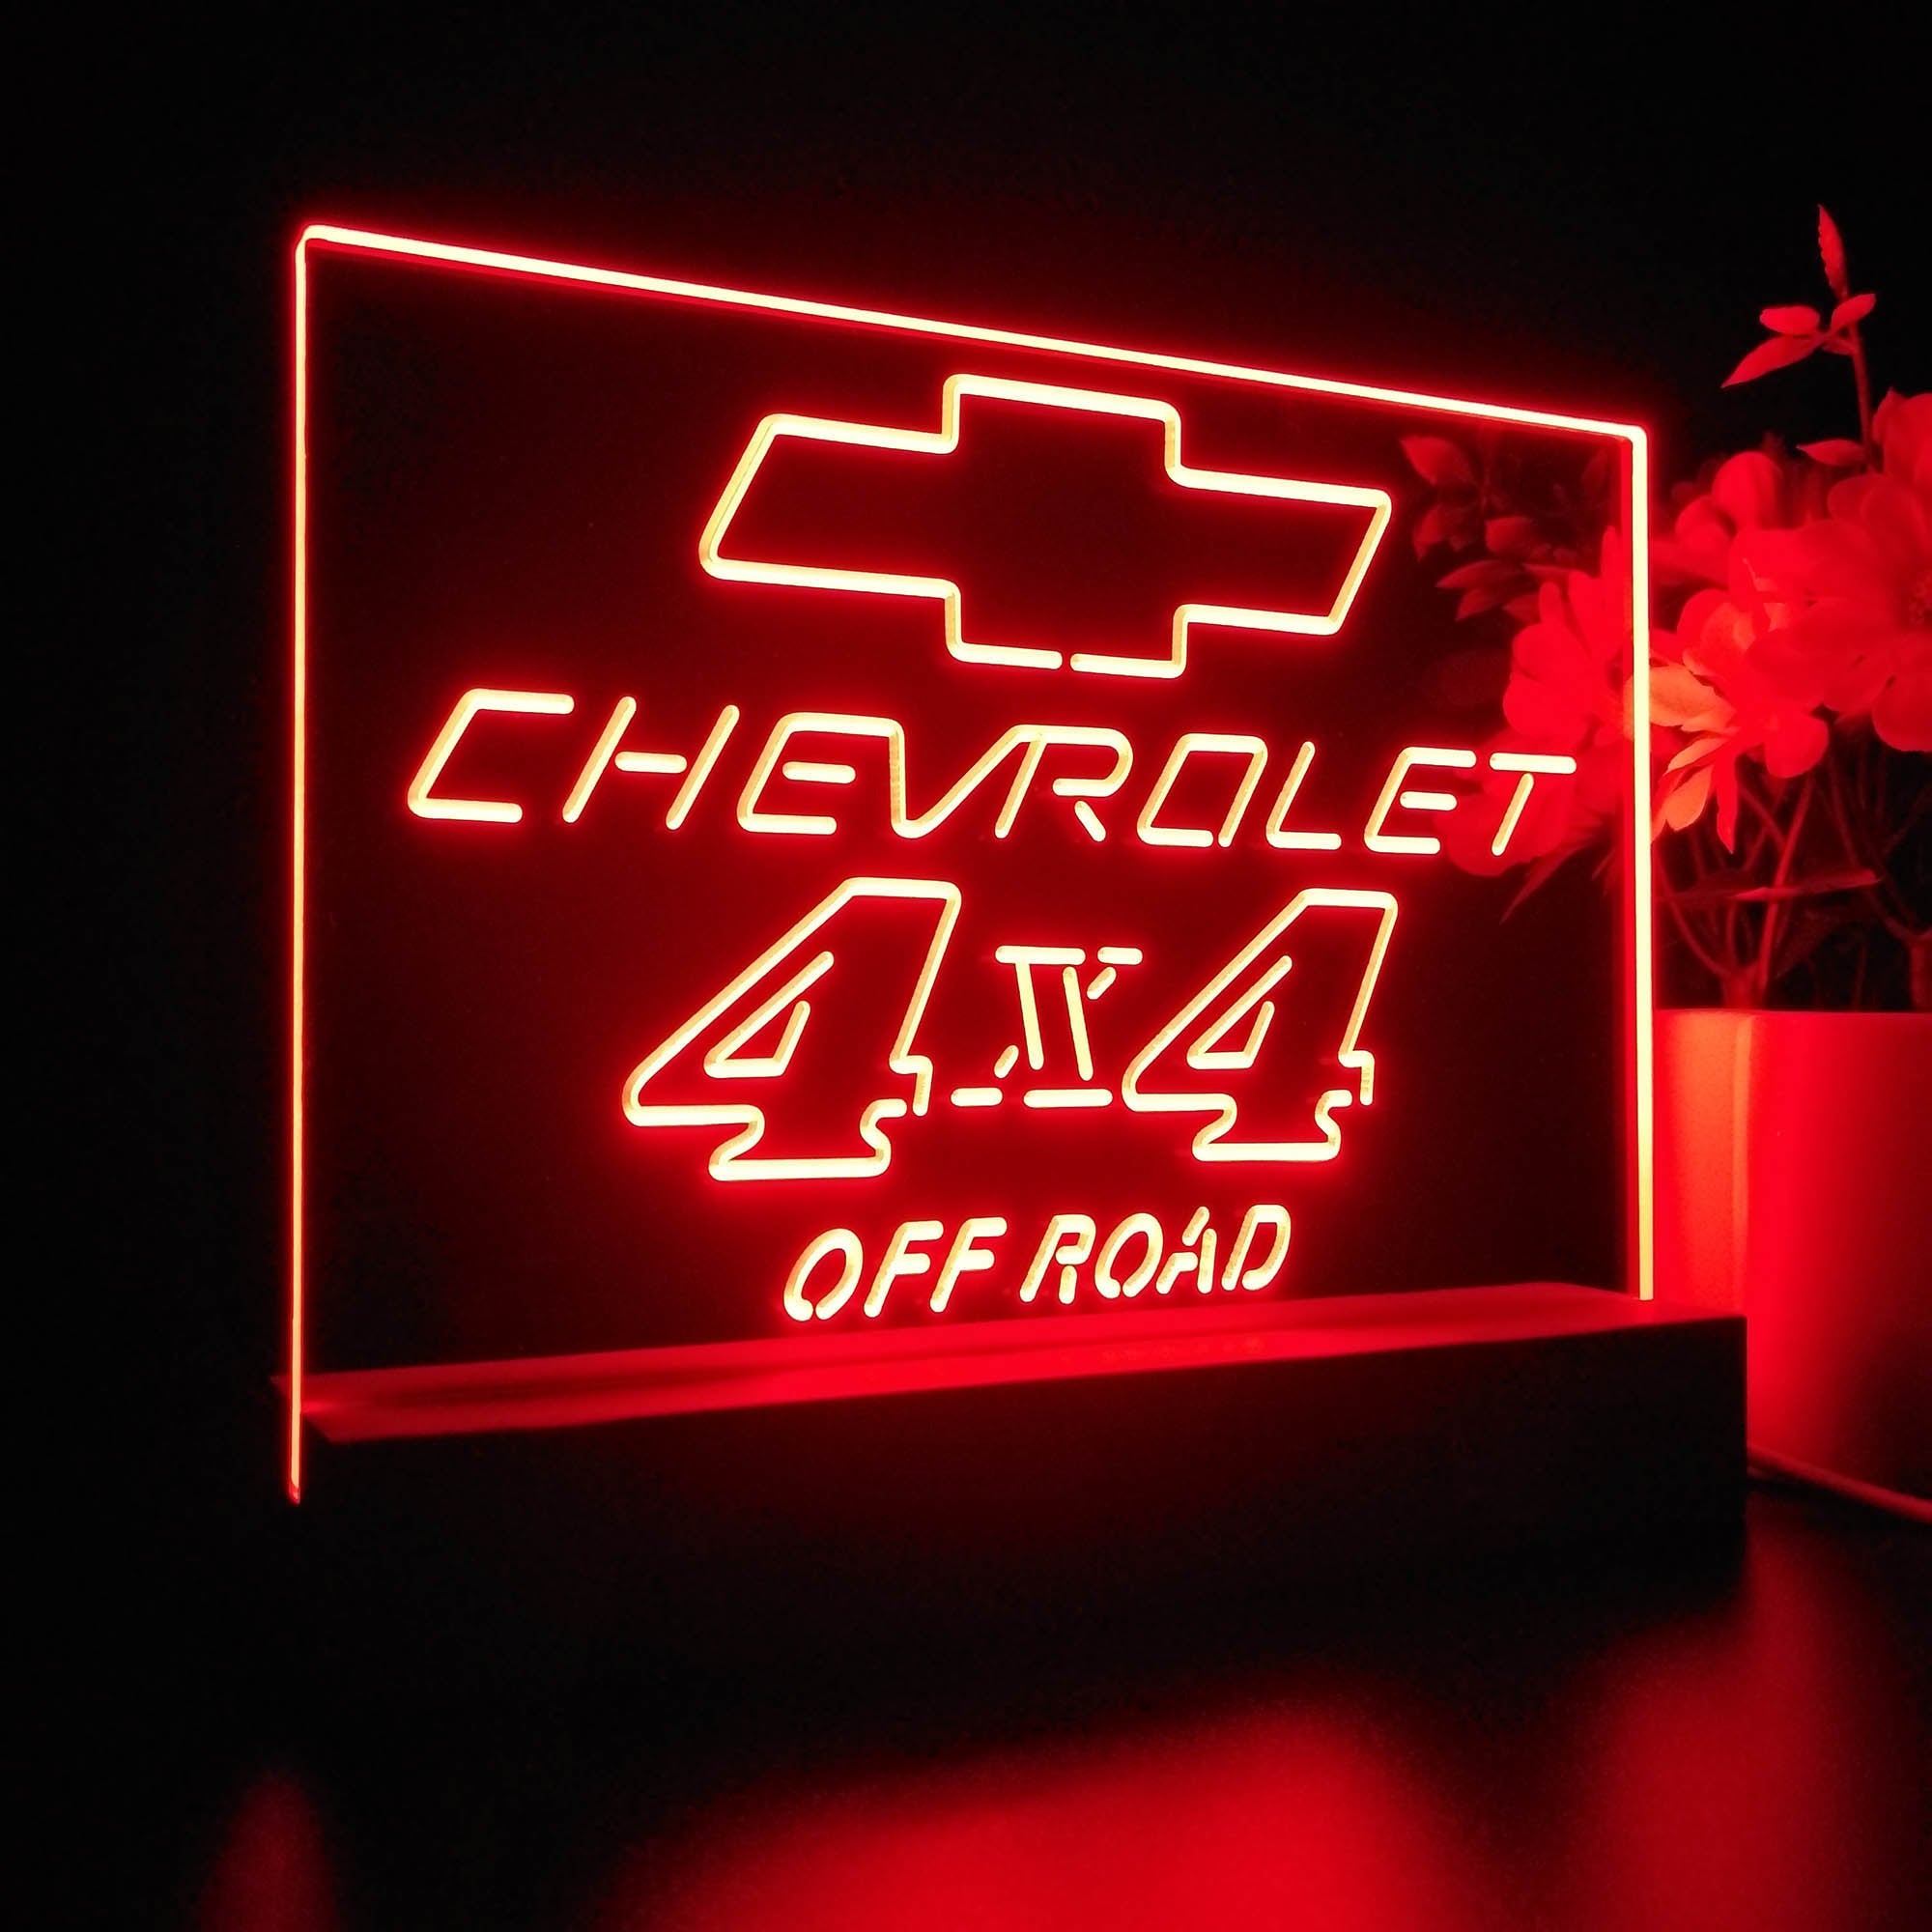 Chevrolet 4x4 Off Road 3D LED Illusion Night Light